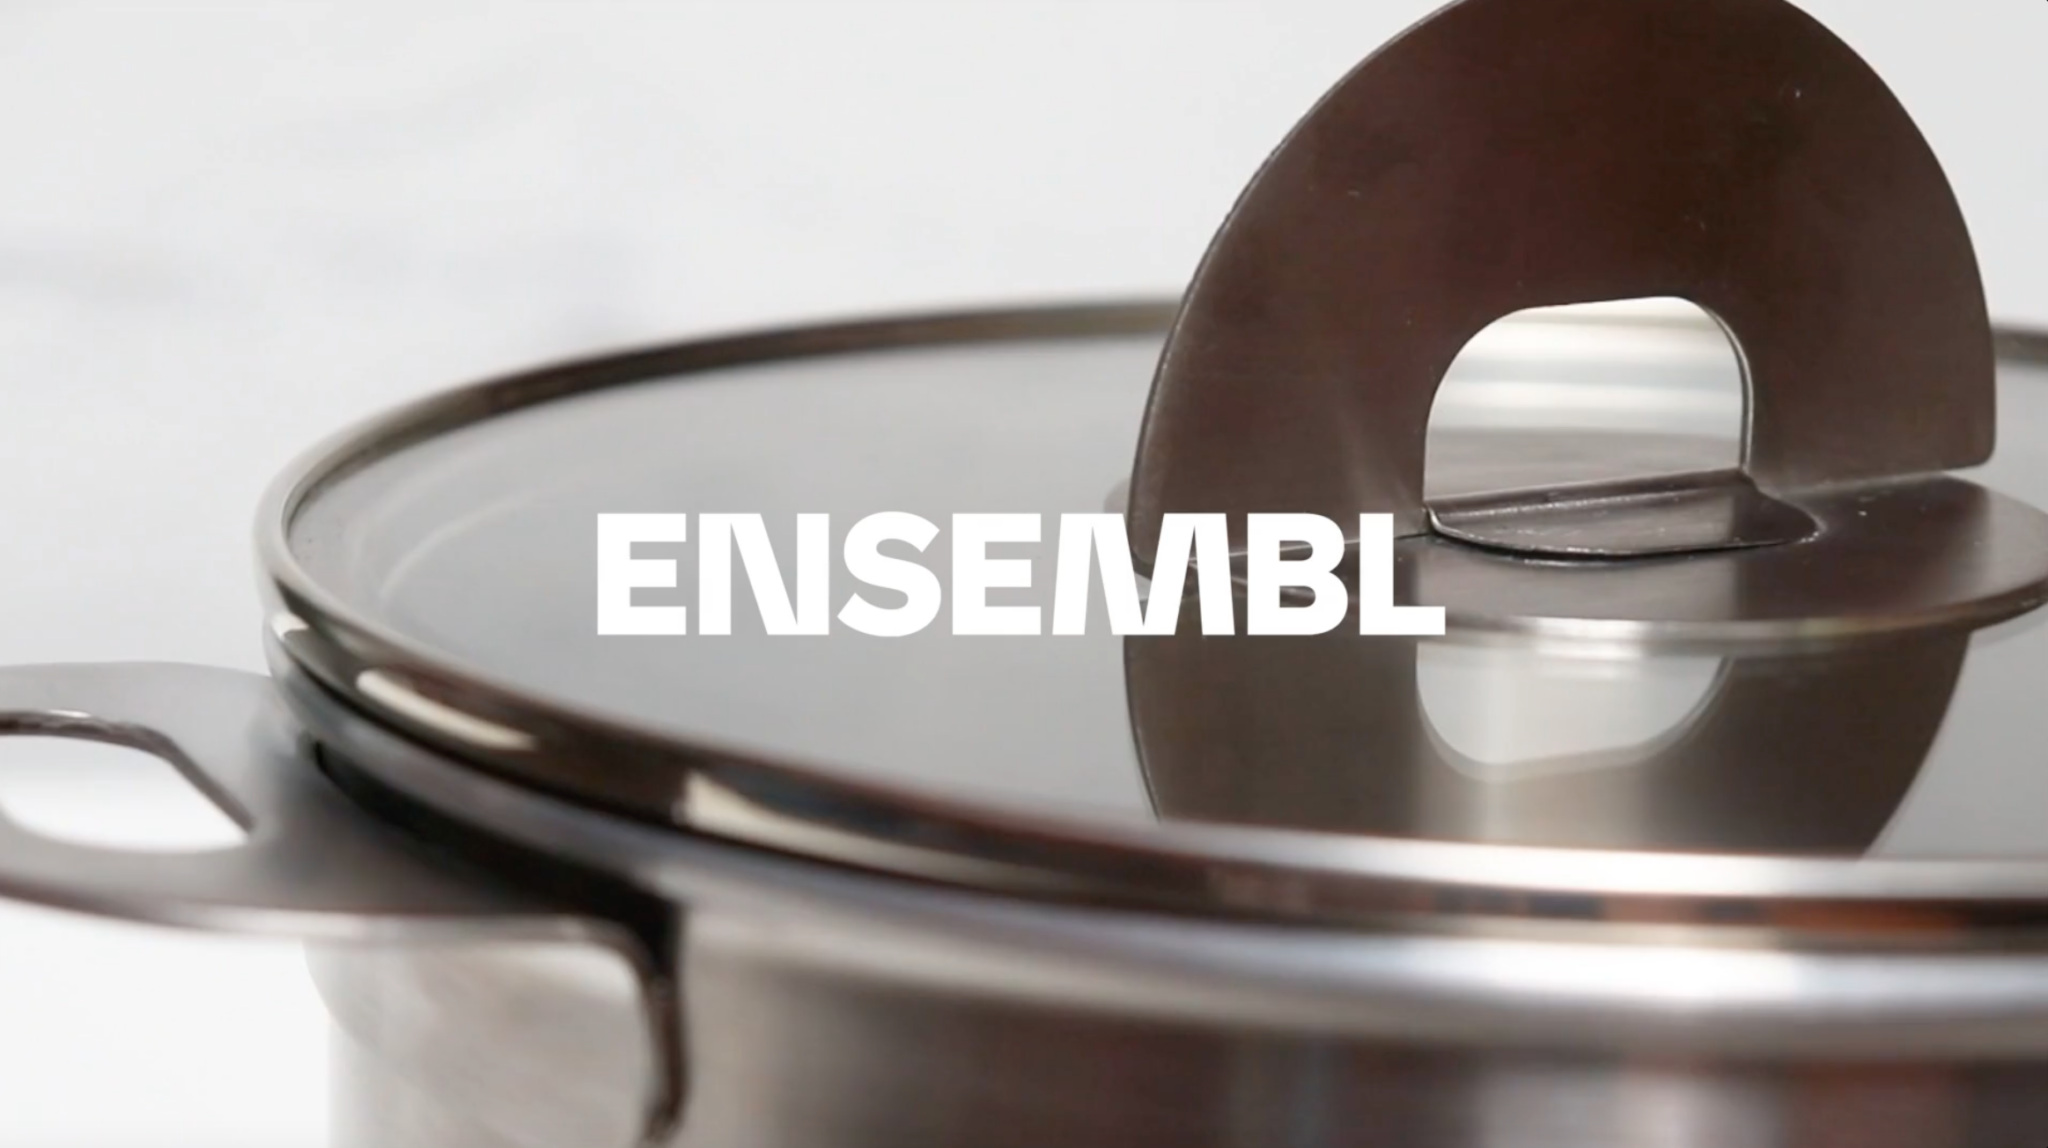 ENSEMBL logo over stainless steel cookware